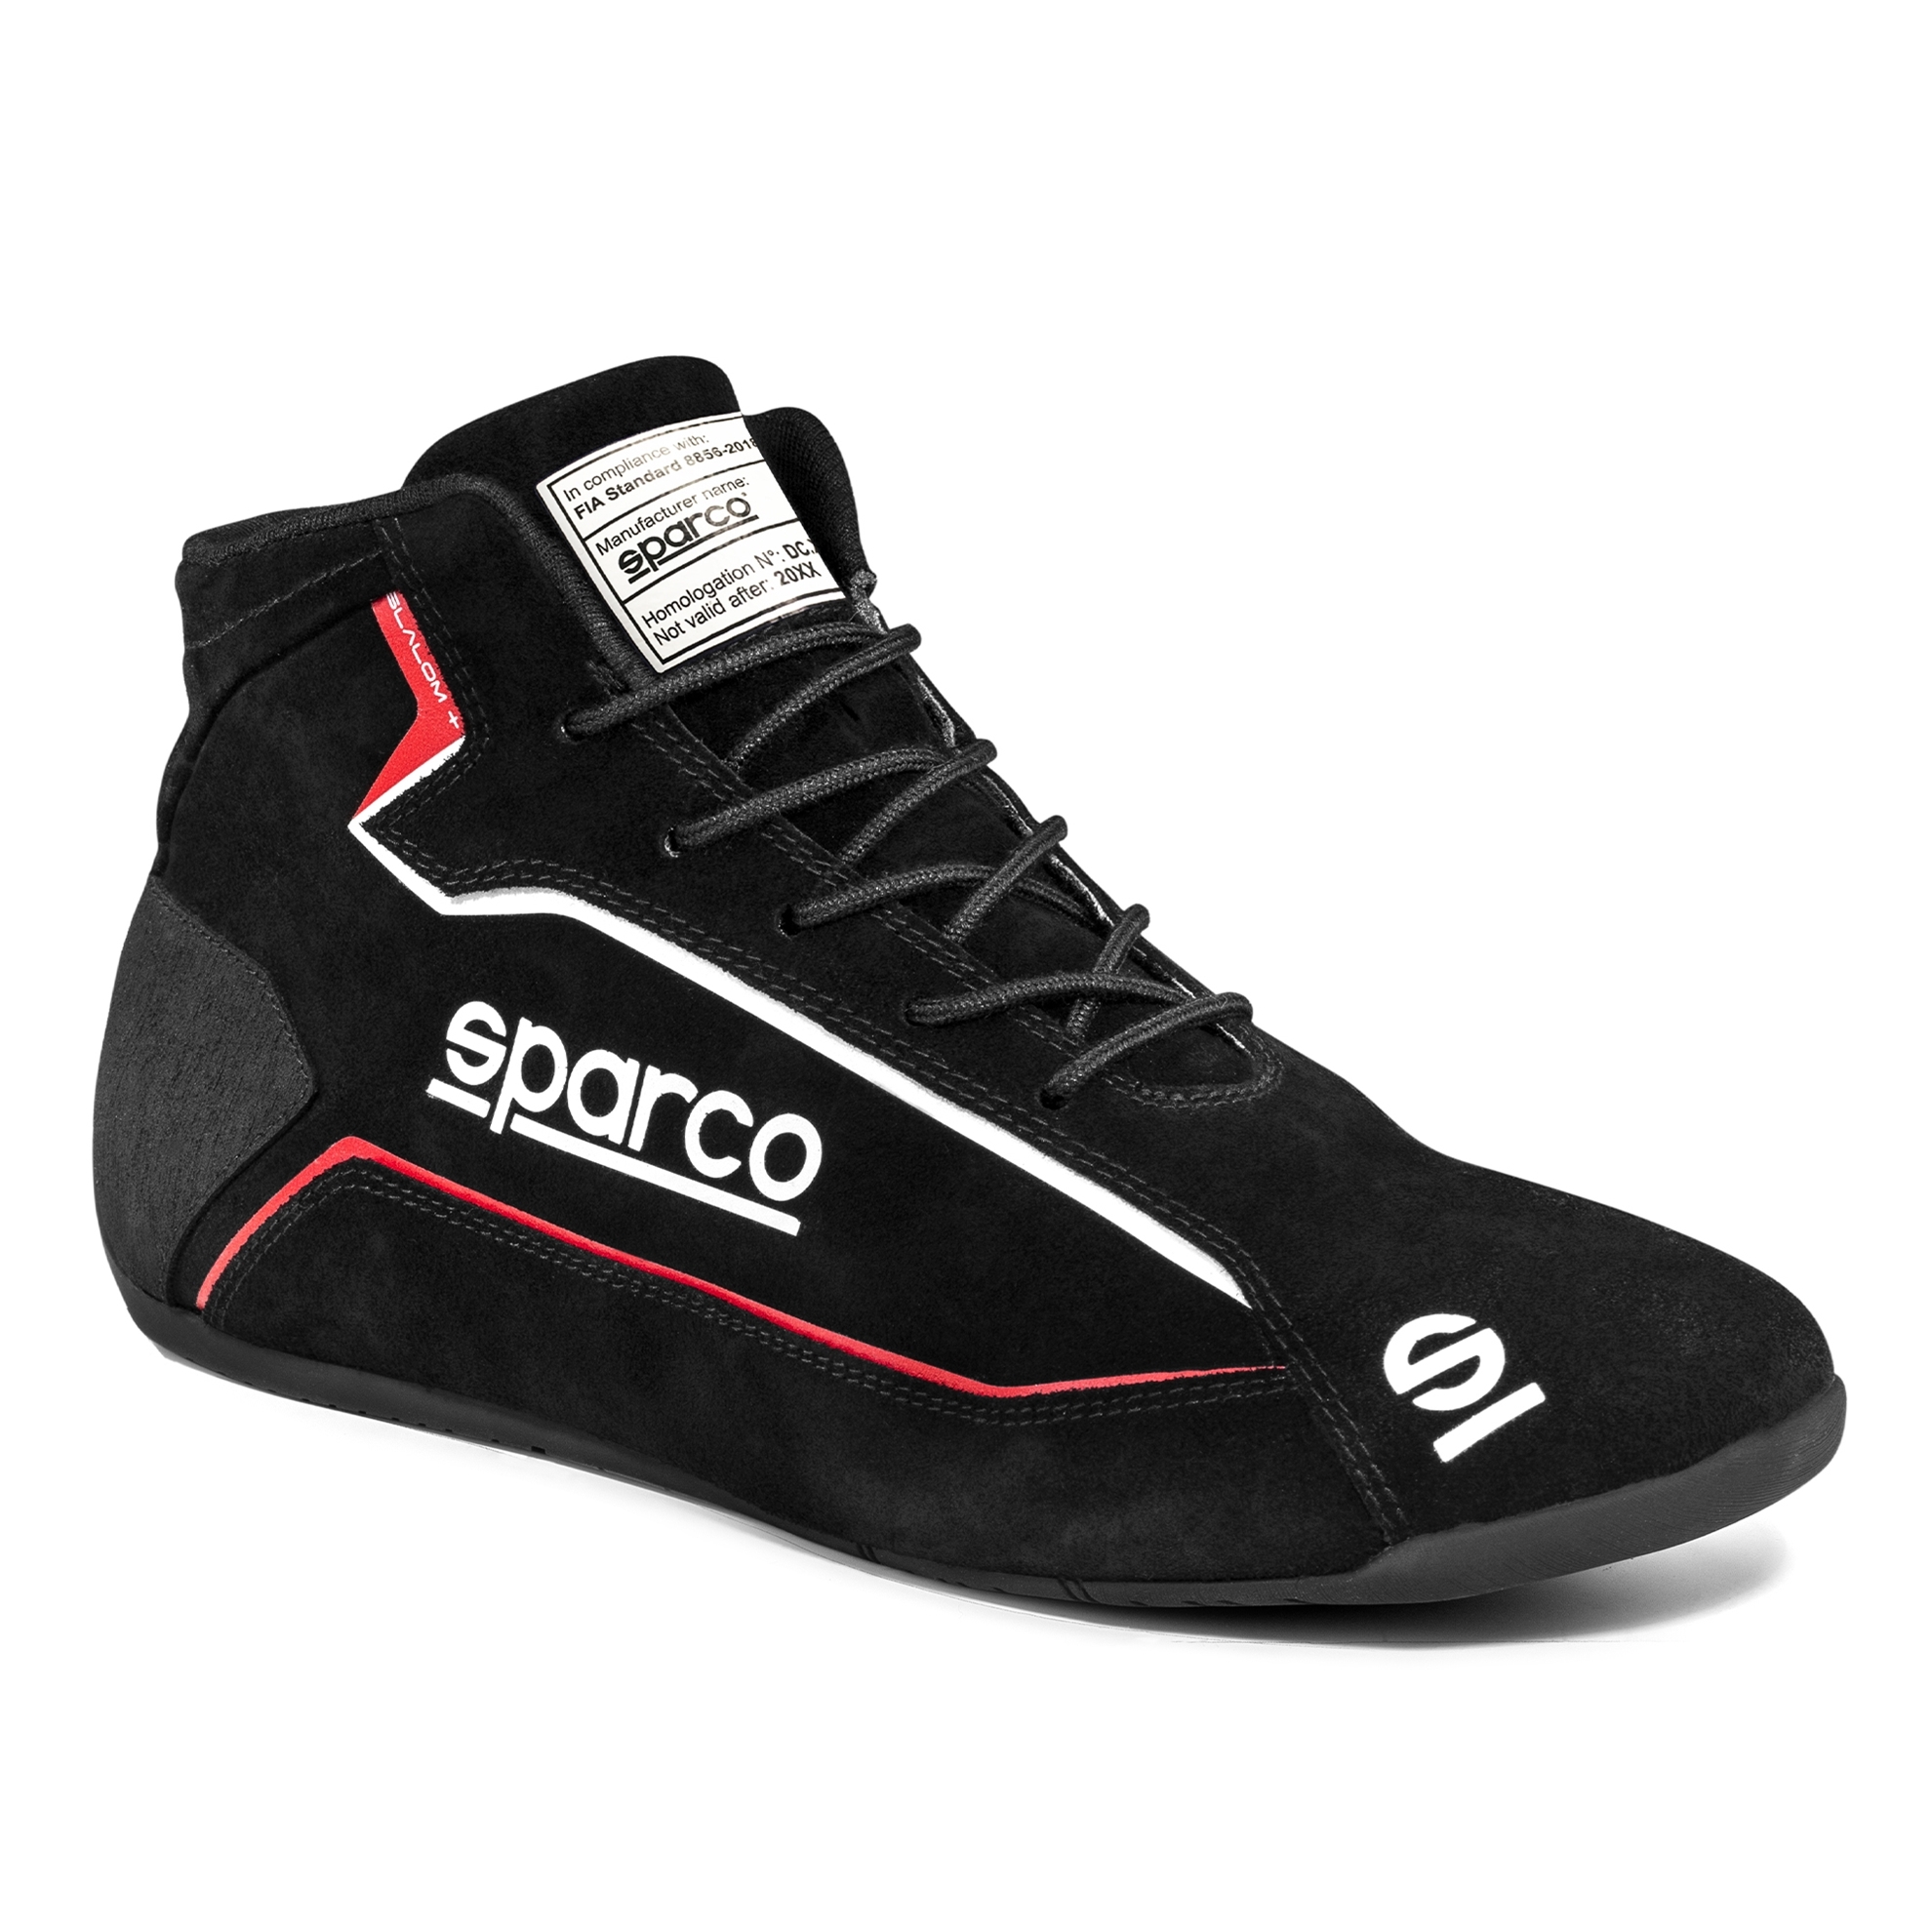 SFI 3.3 Level 5/FIA Alpinestars 2710618-31-9 SP Shoes Suede Red/Black Size 9 